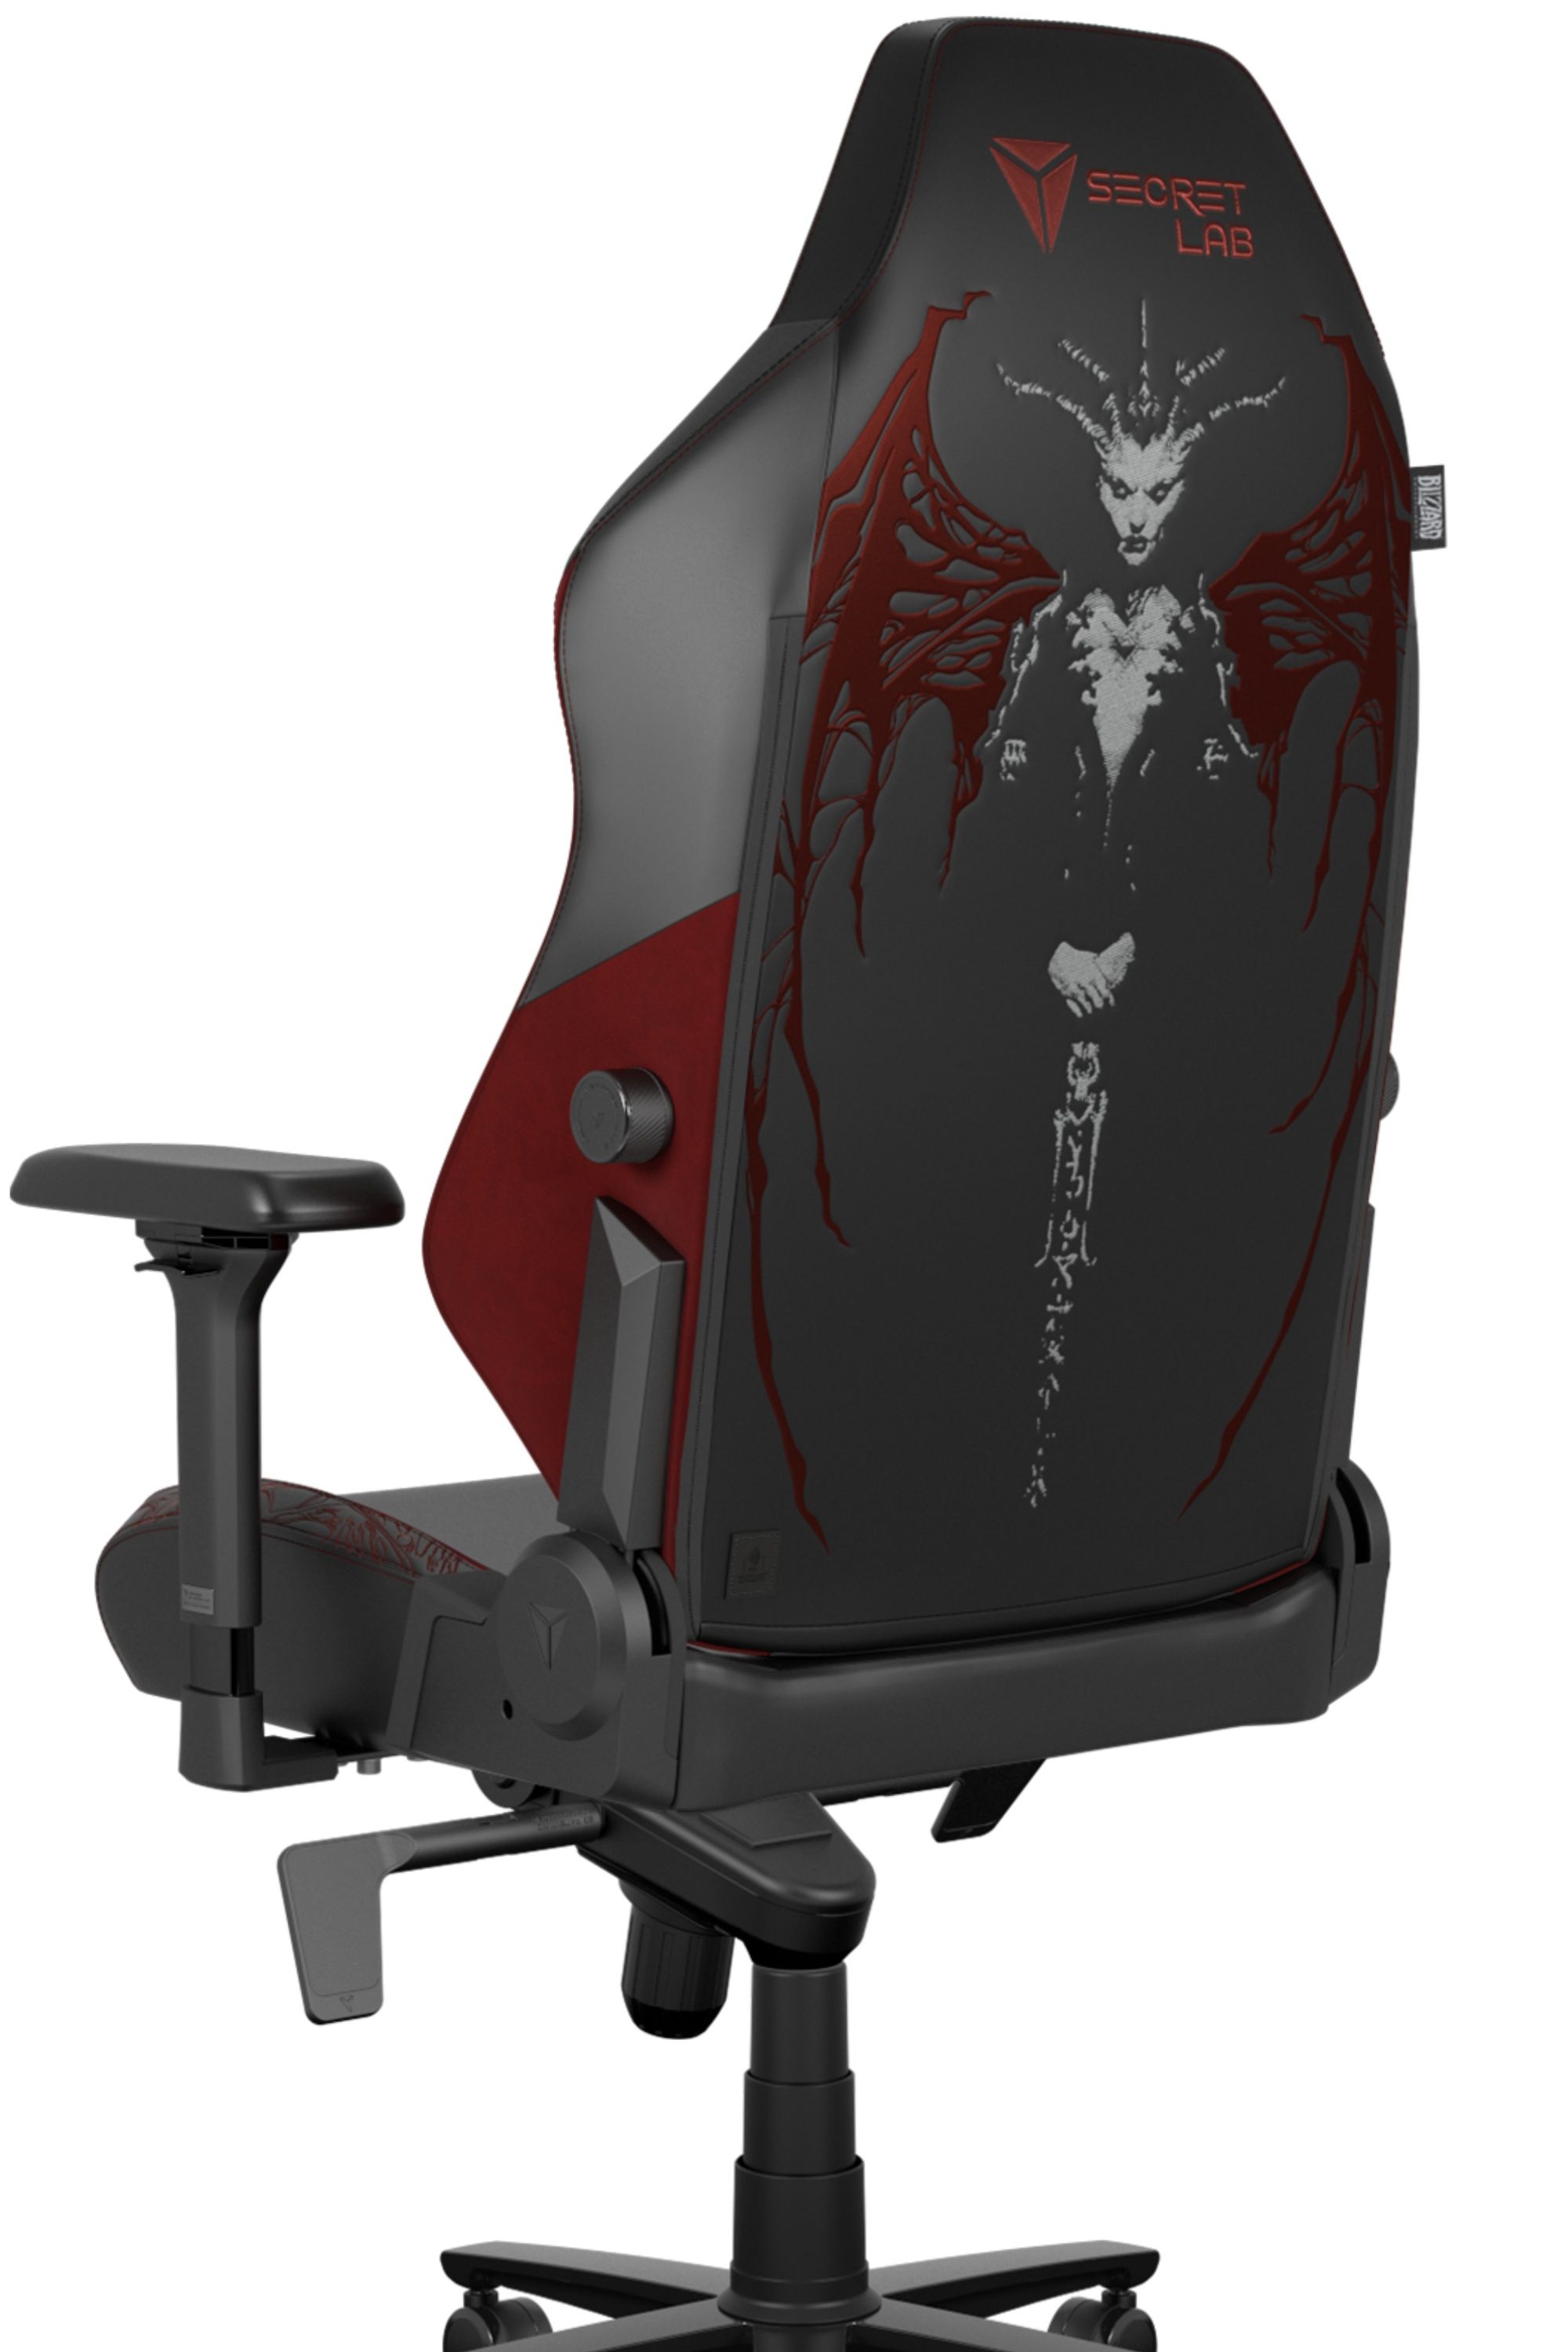 Lilith & Inarius Diablo 4 Titan Evo Secretlab Chairs